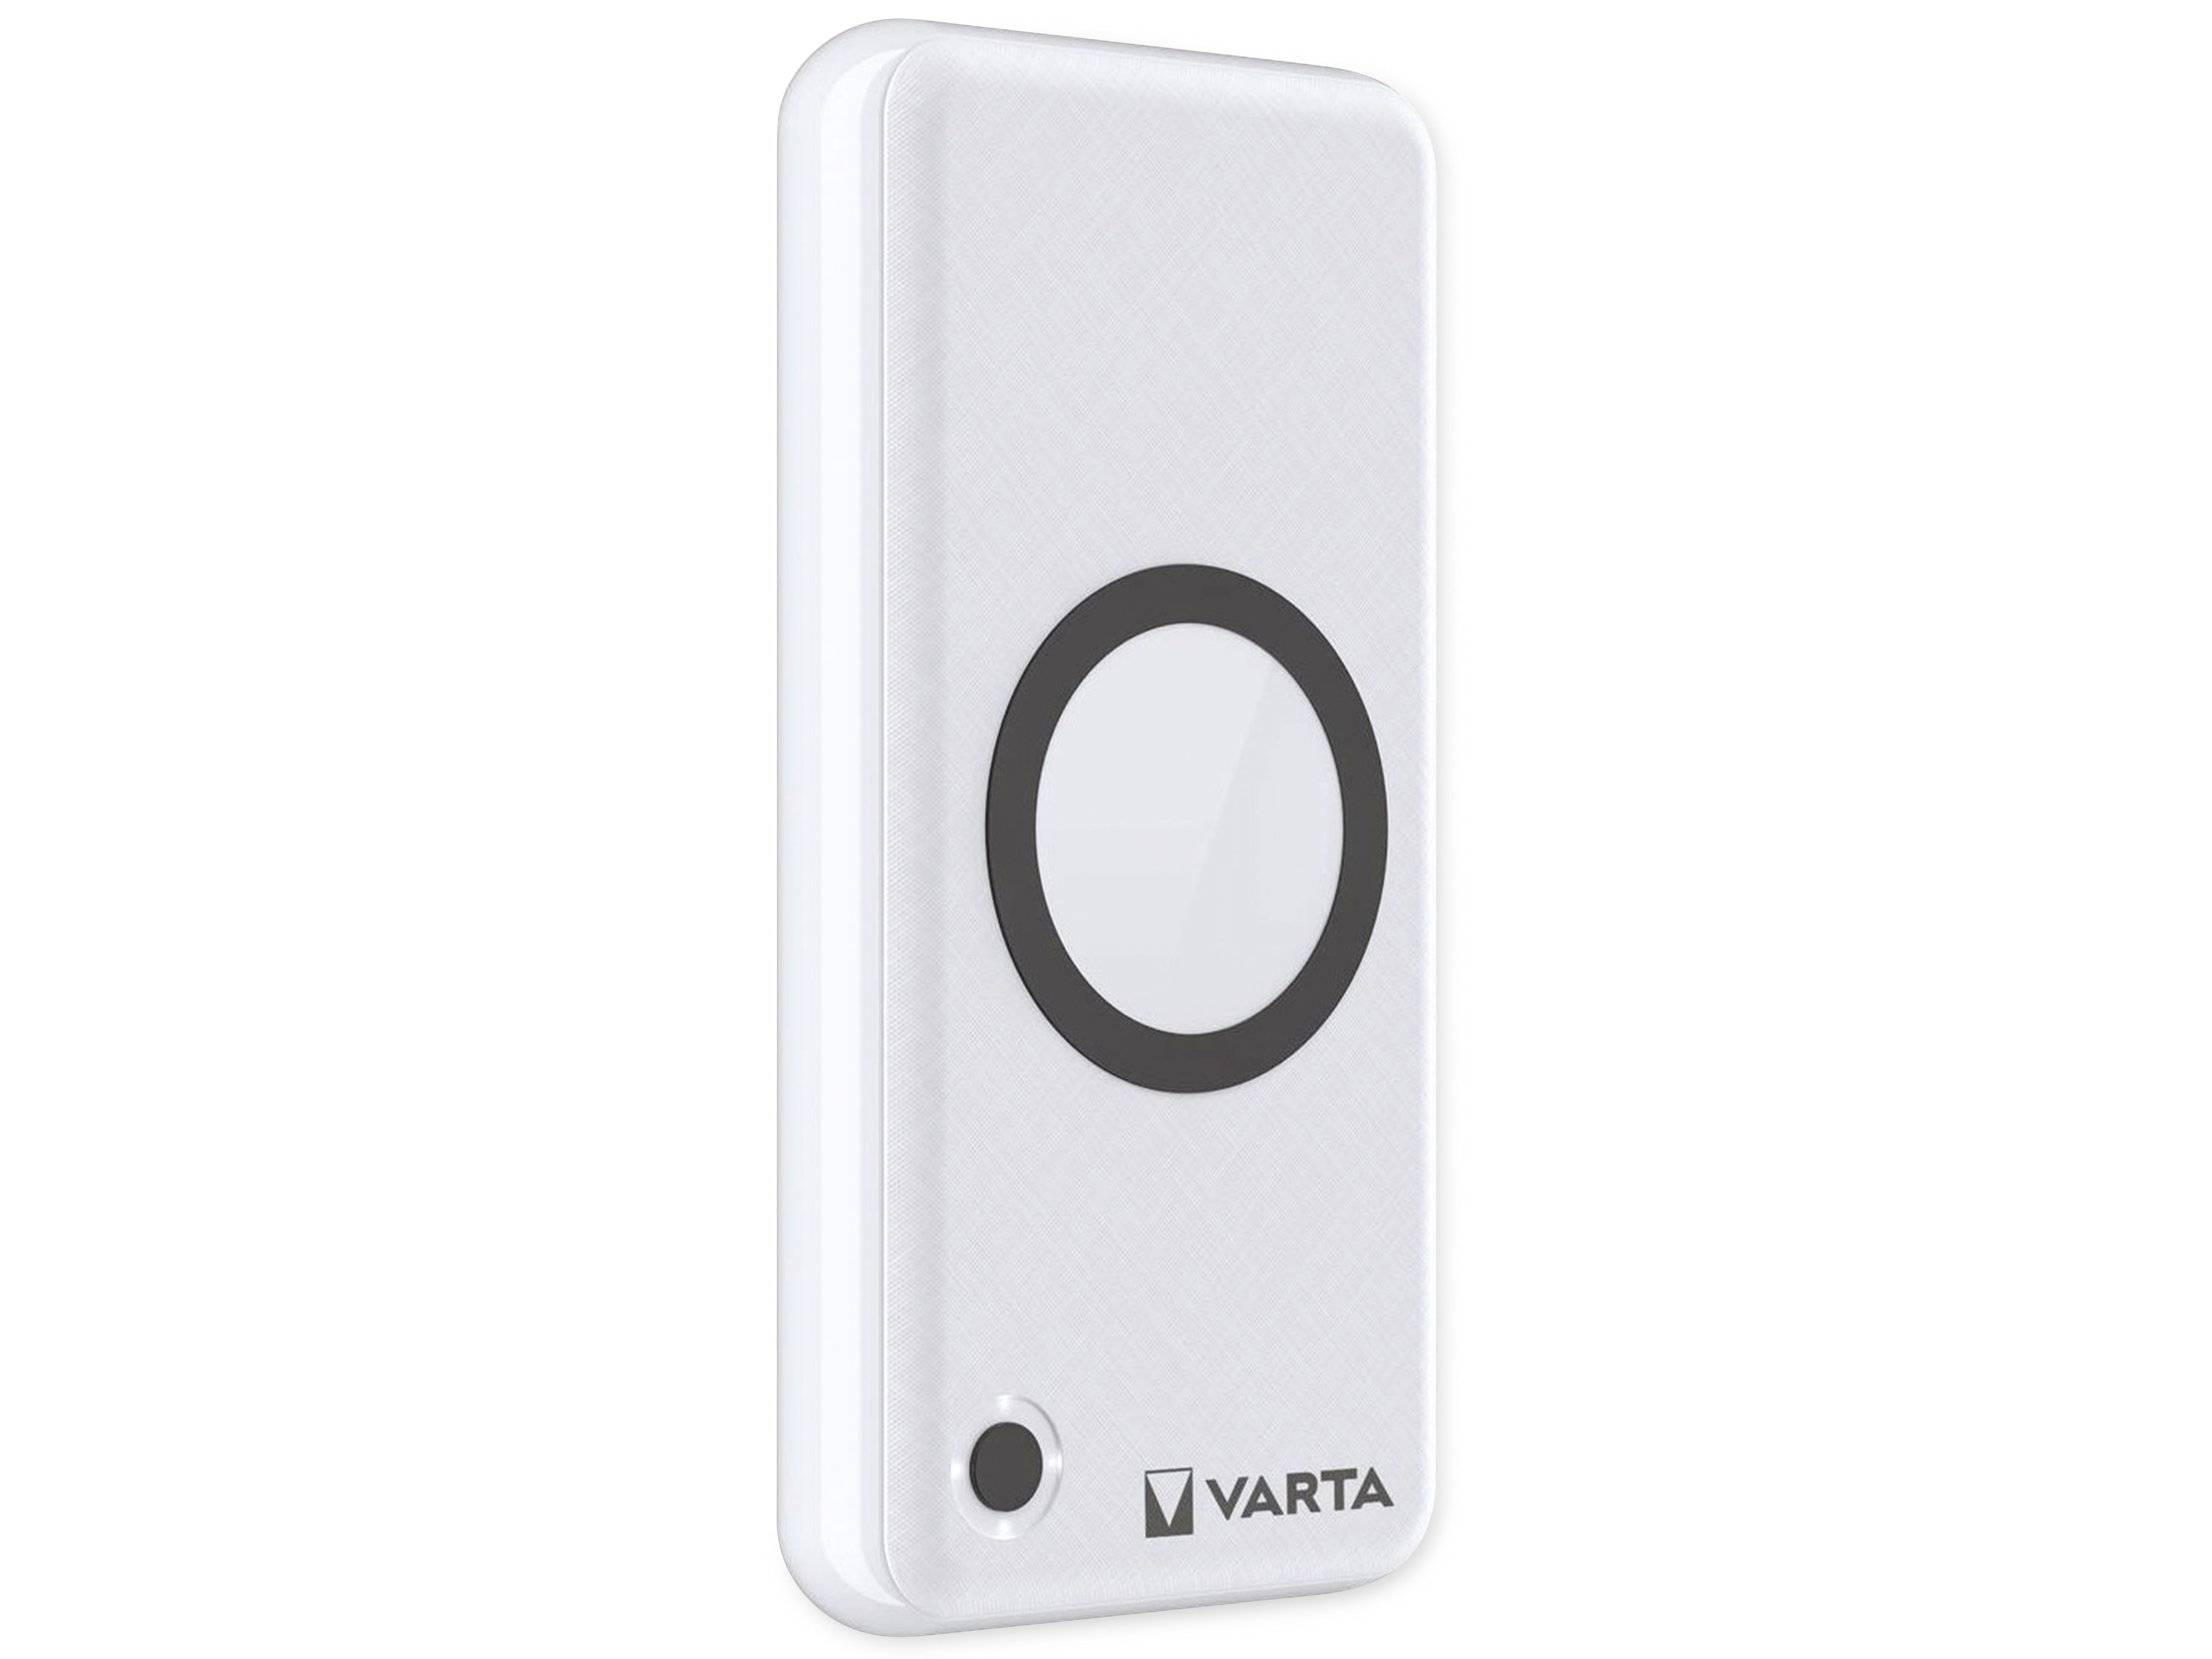 VARTA USB-Powerbank Wireless, 20.000mAh, mit Ladekabel